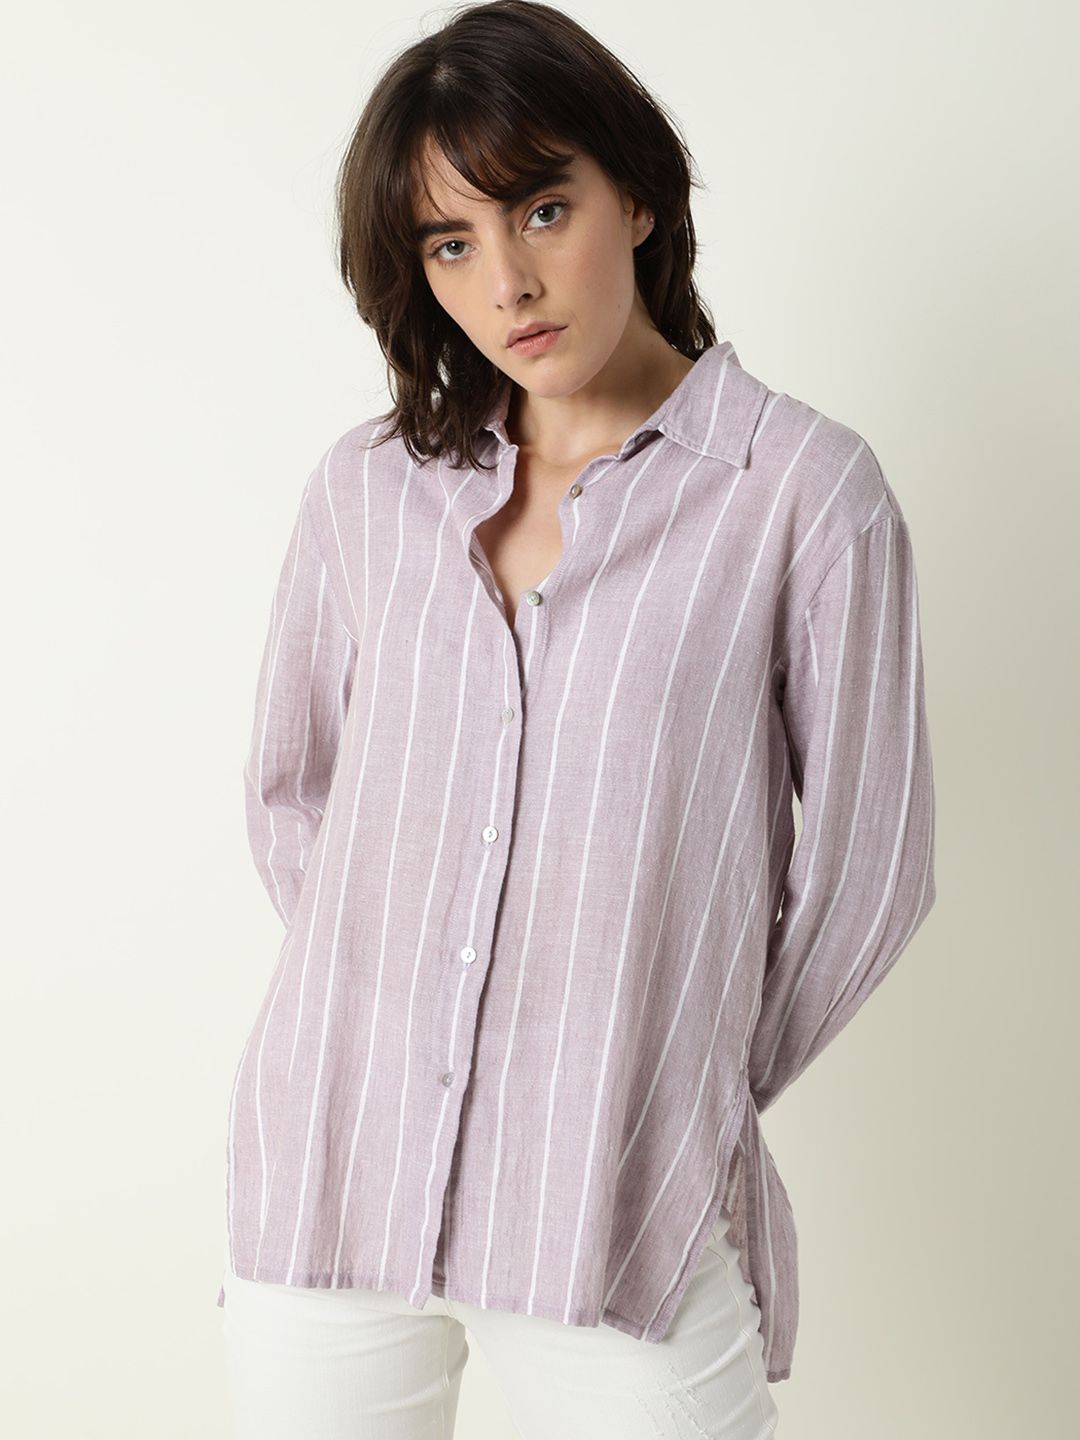 RAREISM Purple Striped Cotton Shirt Style Top Price in India